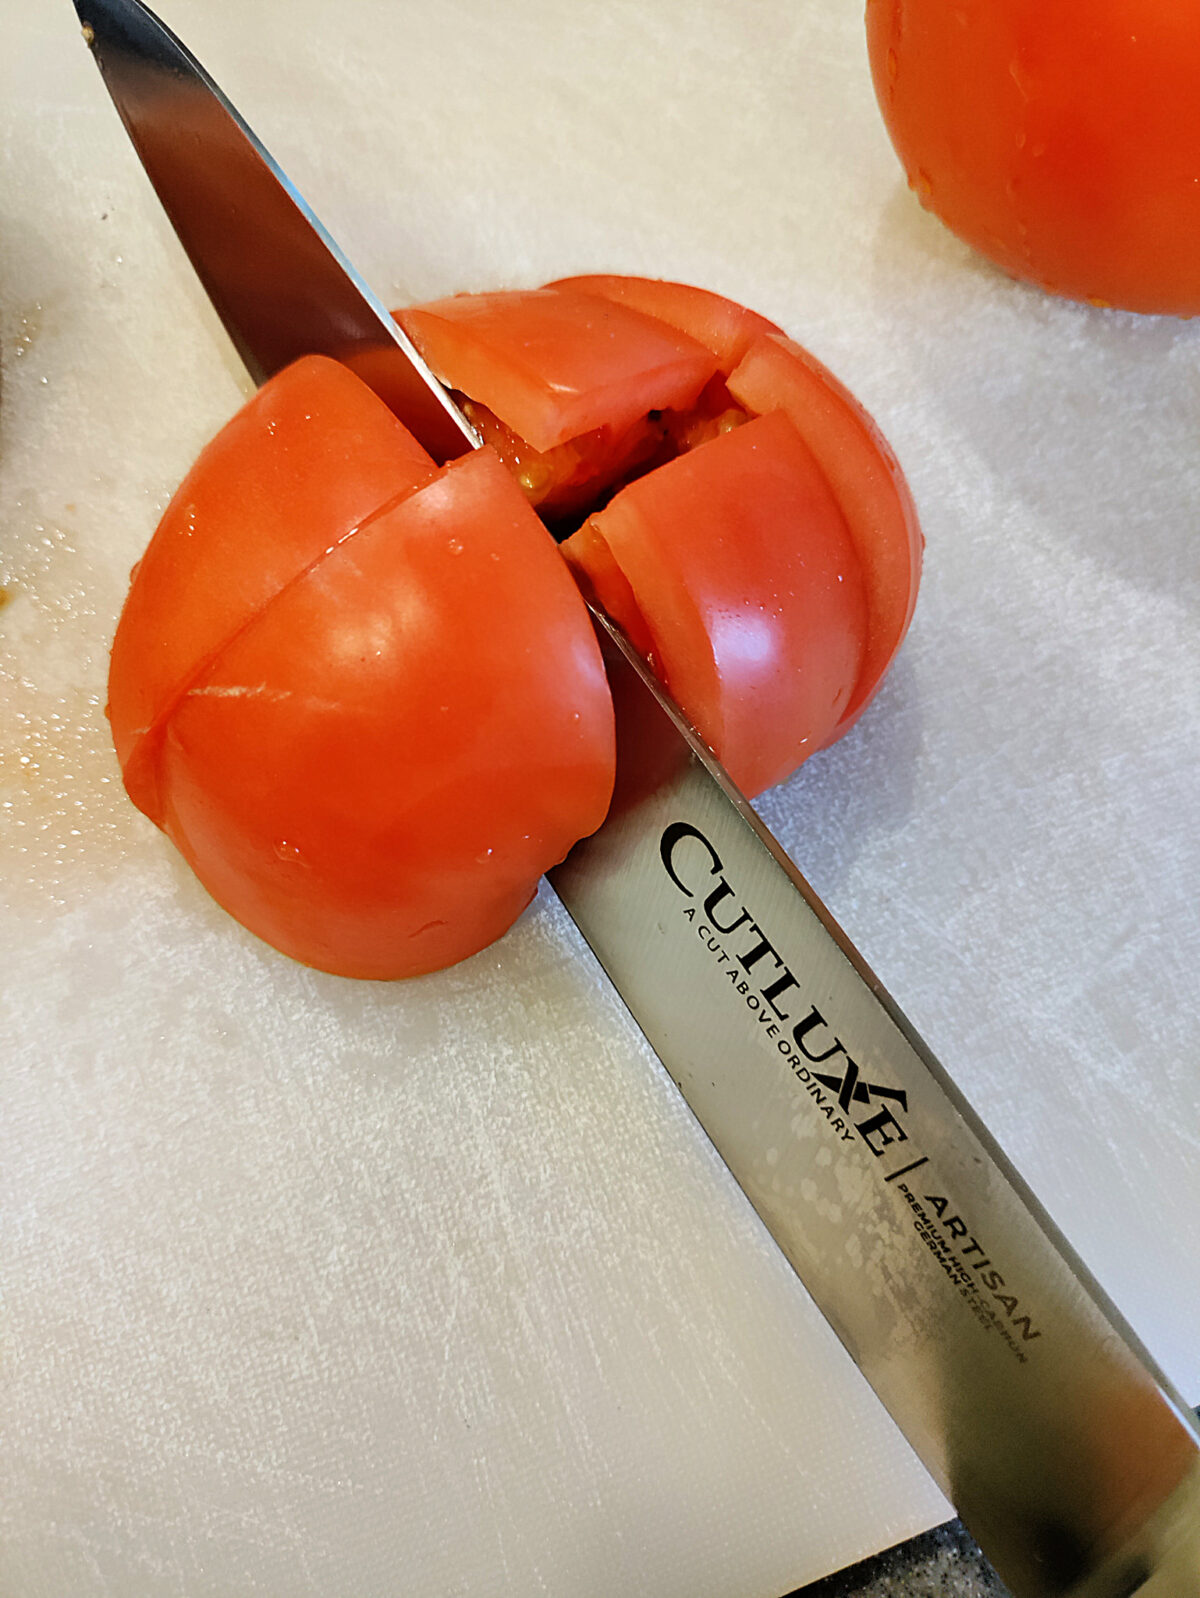 Cutluxe knife cutting a tomato